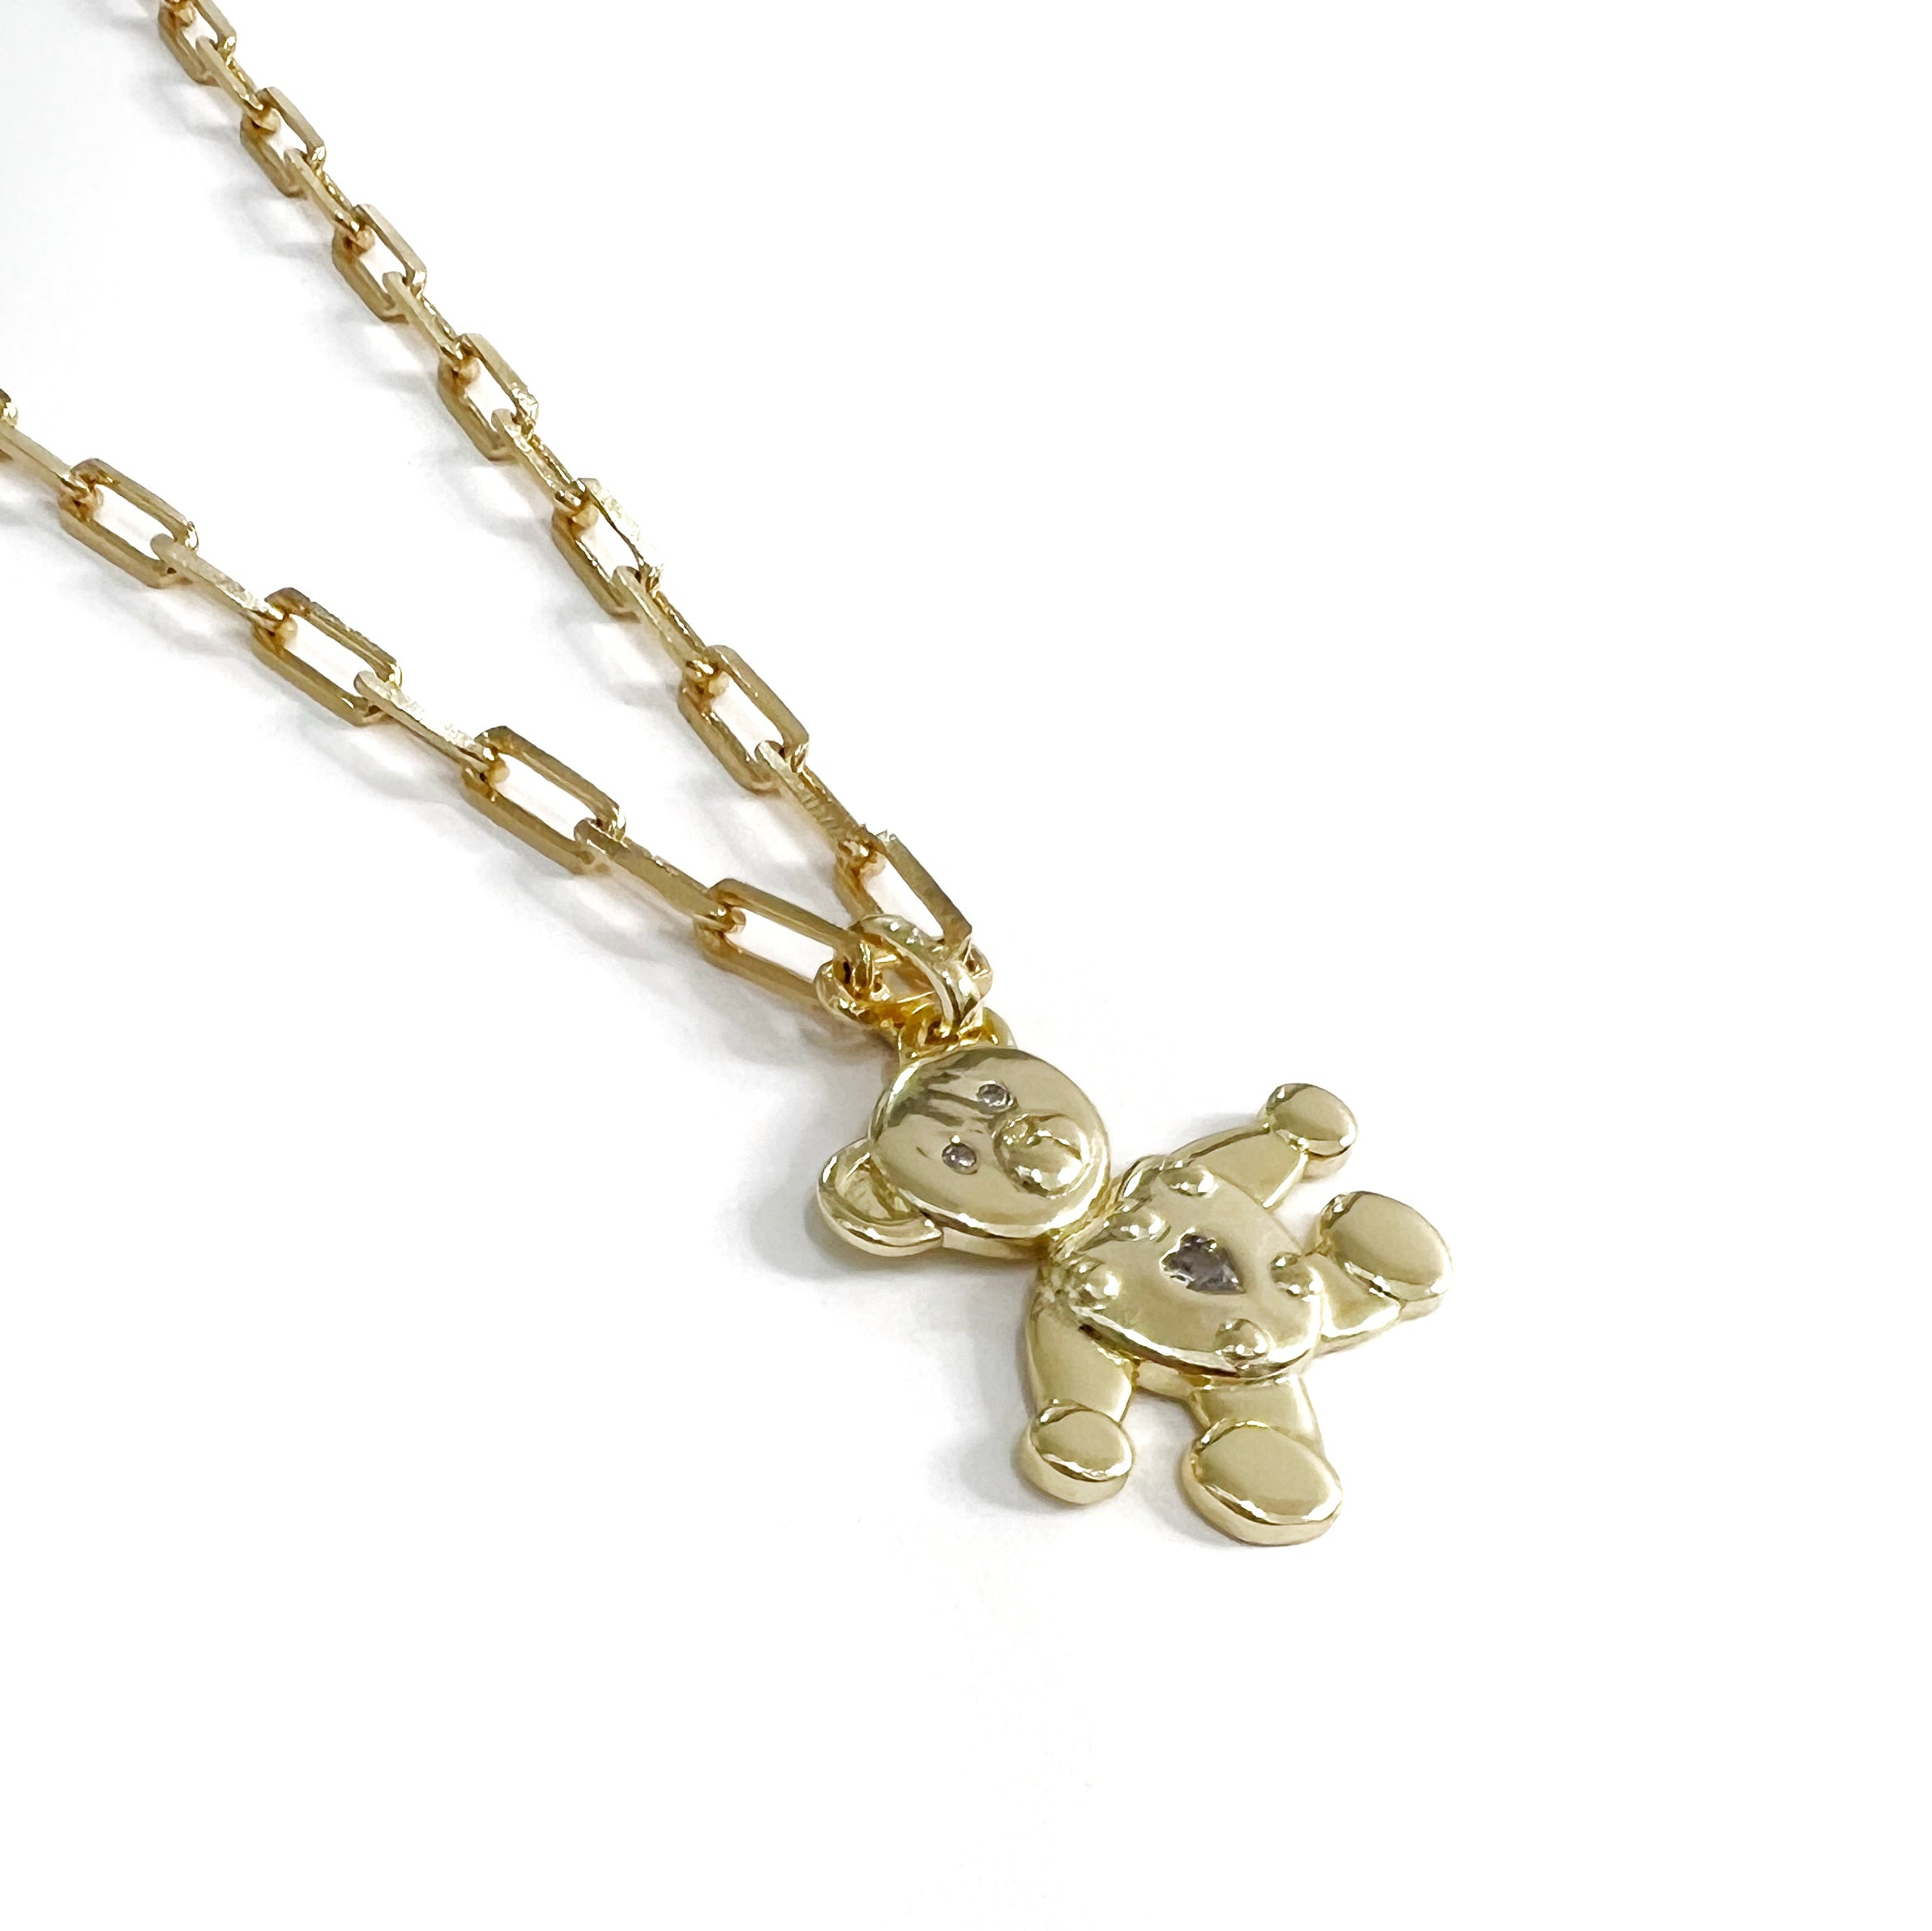 Steiff Teddy Bear Pendant Necklace Jointed Body | eBay